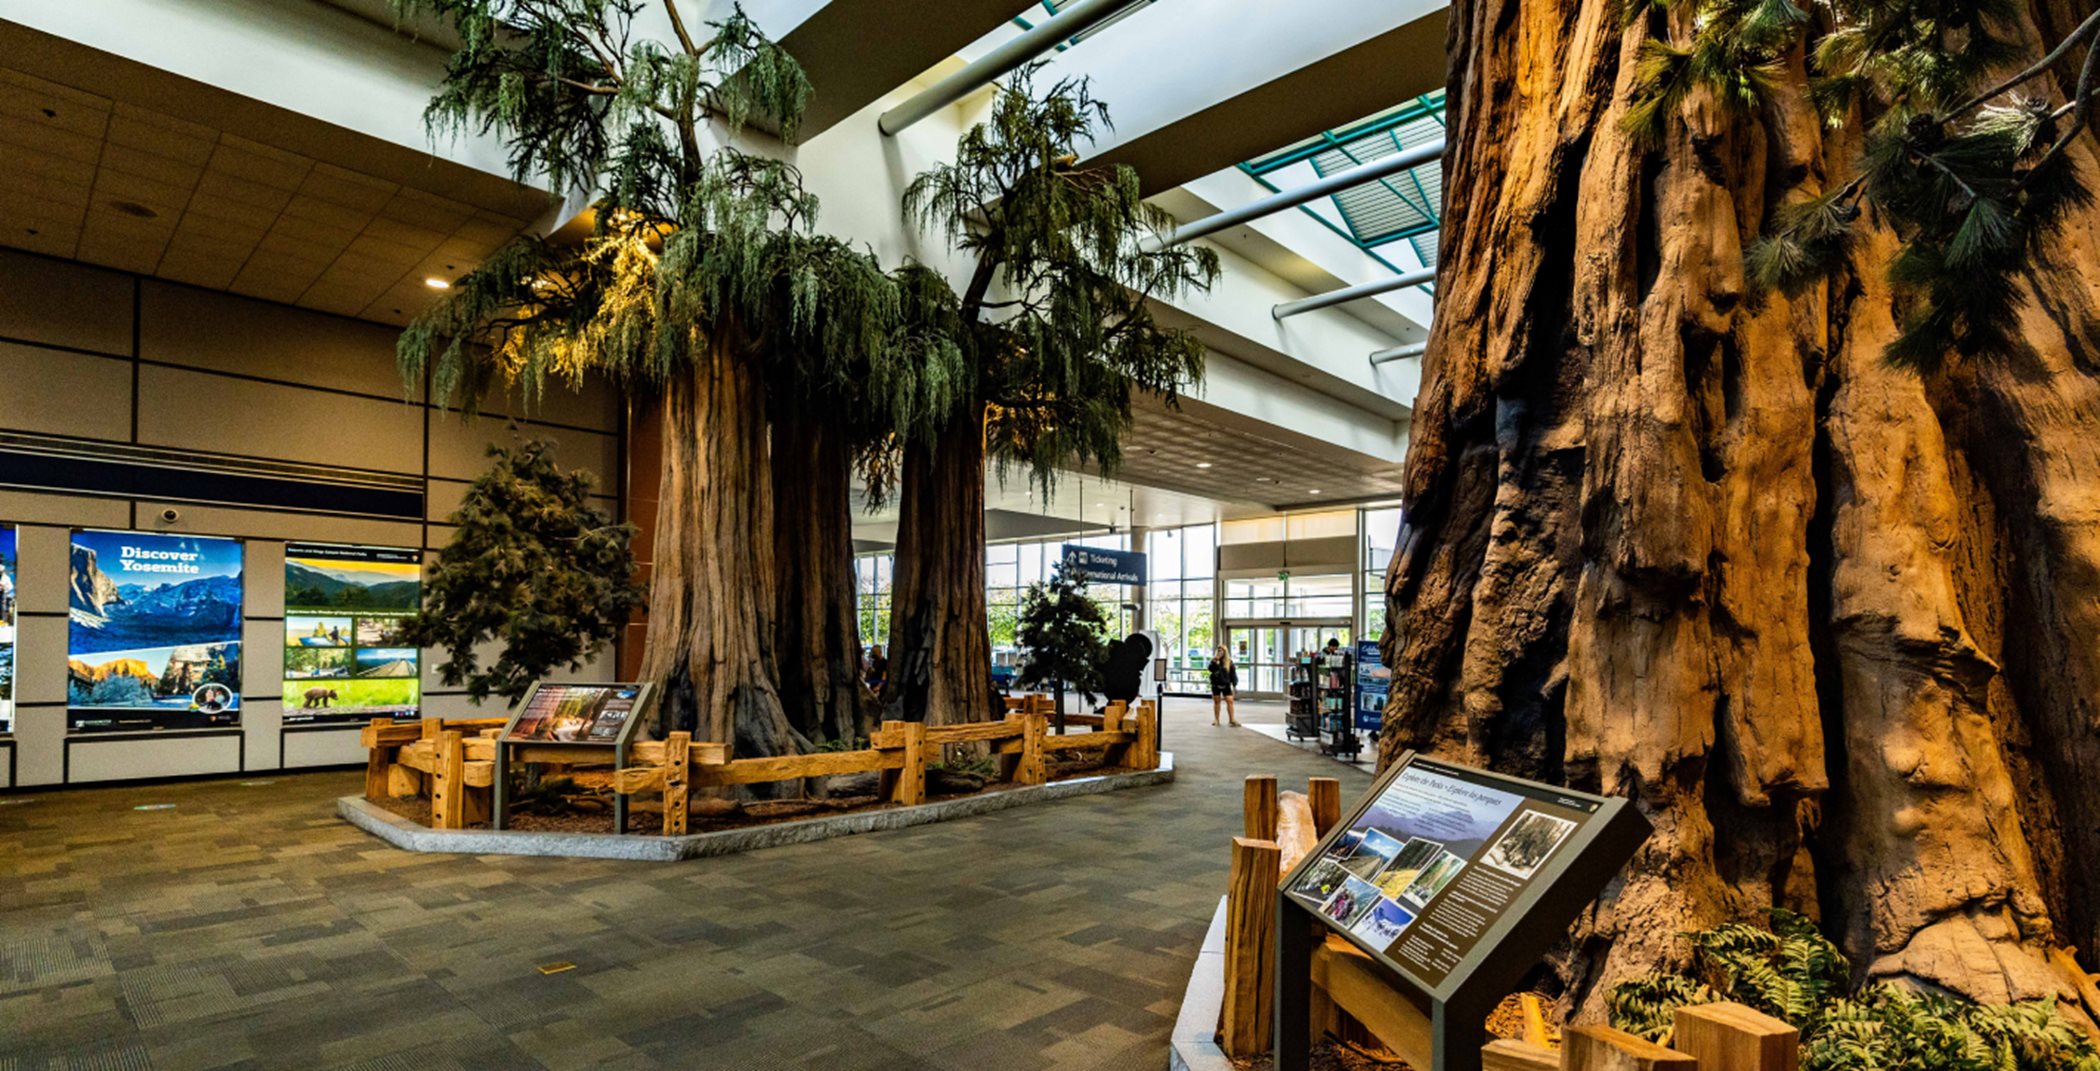 Fresno-Yosemite Airport interior with sequoia trees